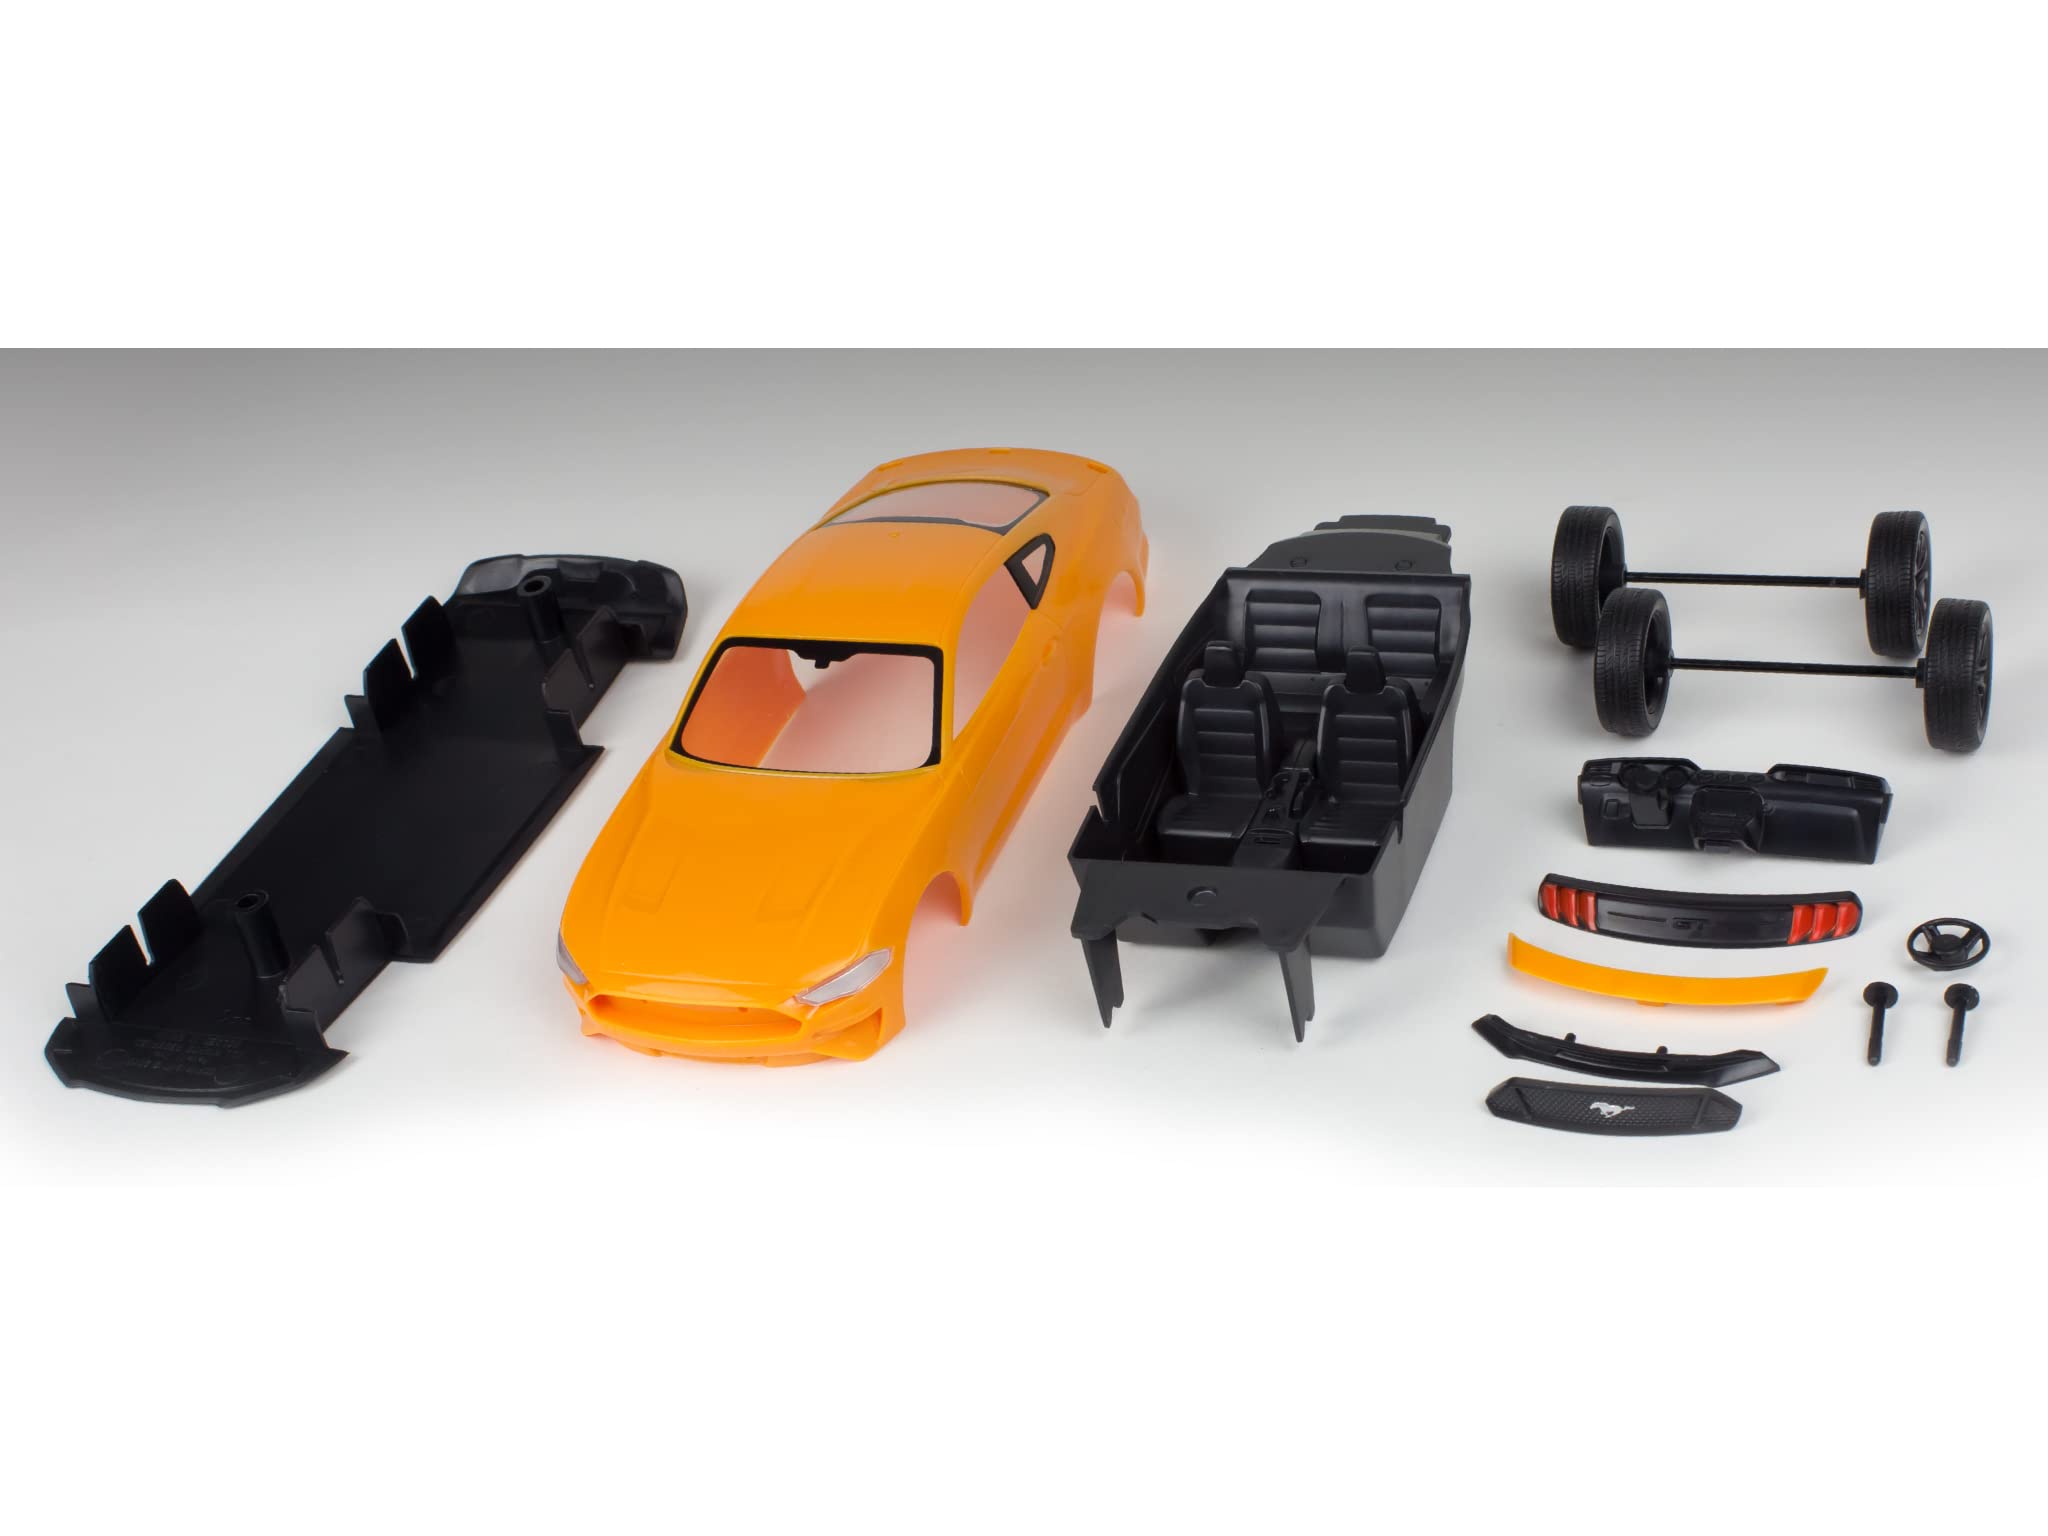 Revell 85-1241 2018 Ford Mustang GT Model Car Kit 1:25 Scale 13-Piece Skill Level 2 Plastic Easy-Click Model Building Kit, Orange